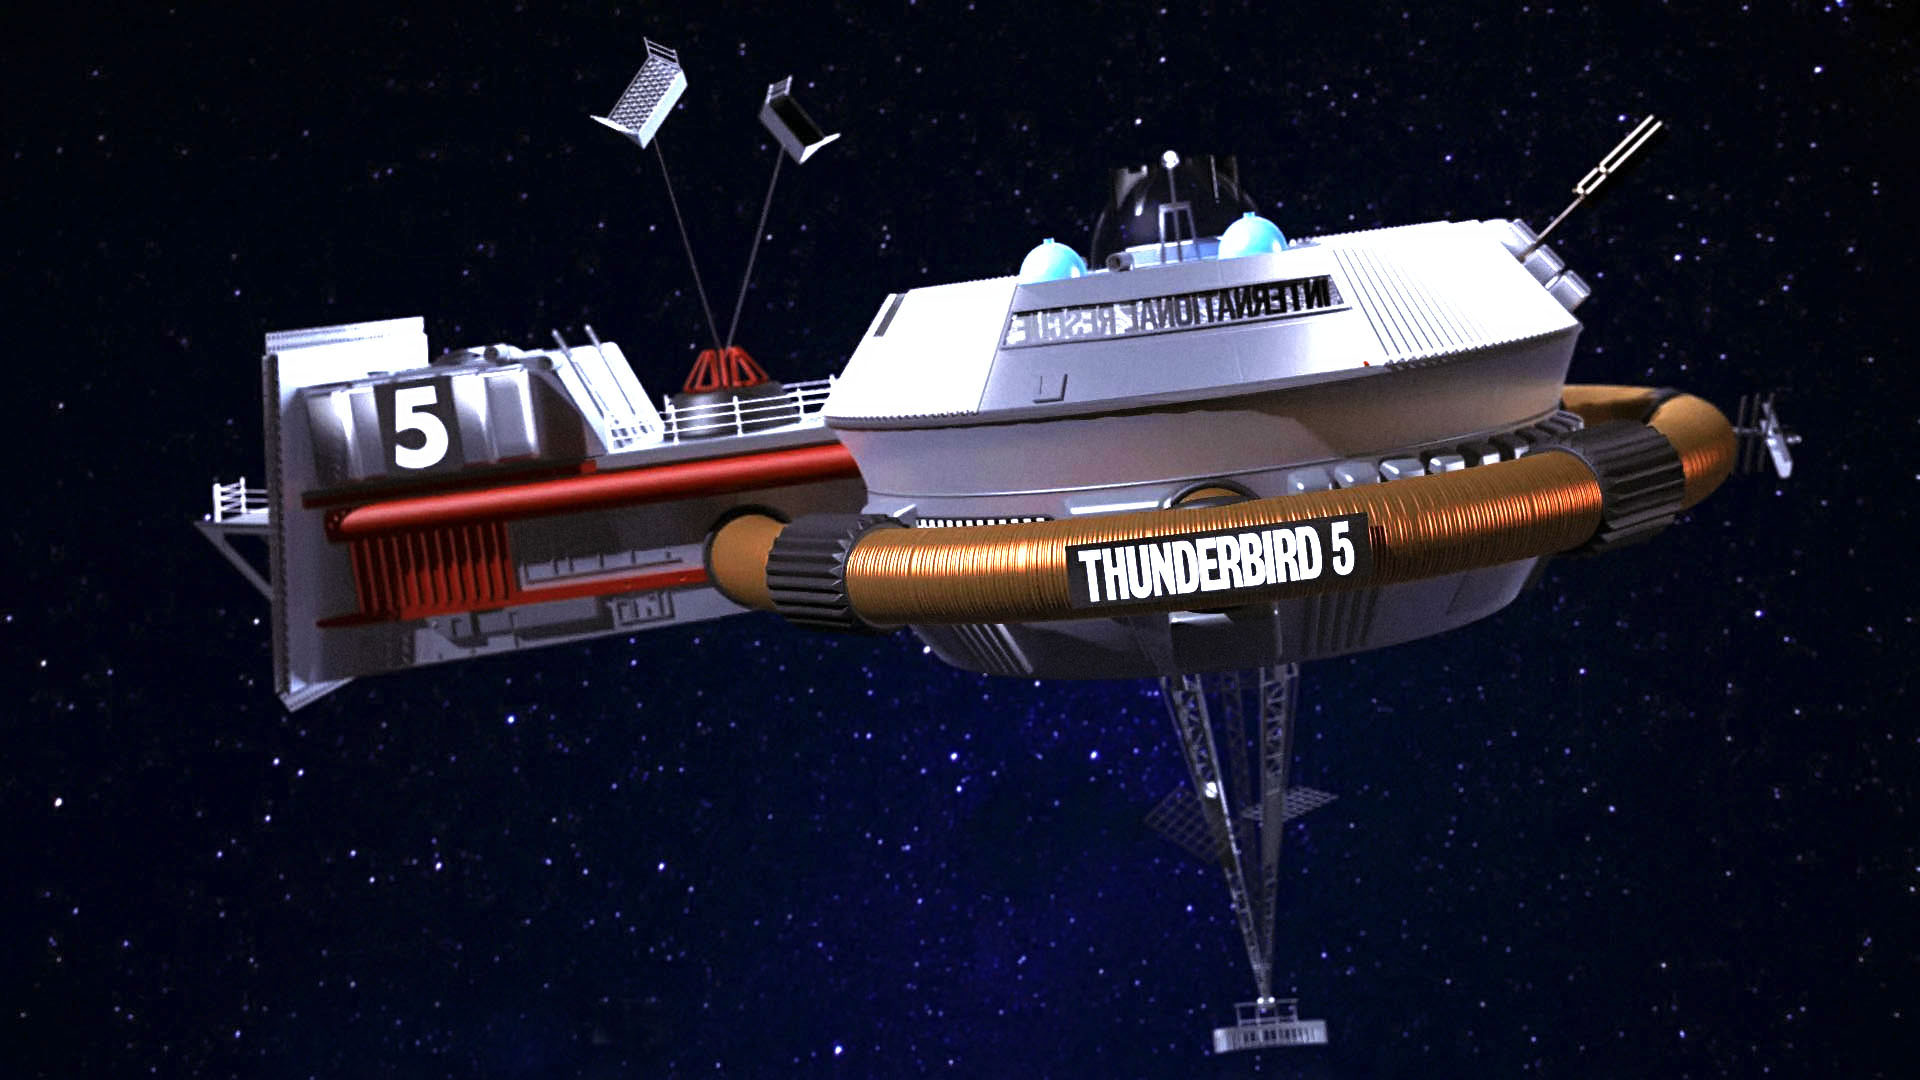 Thunderbird 5 by tryptych on DeviantArt